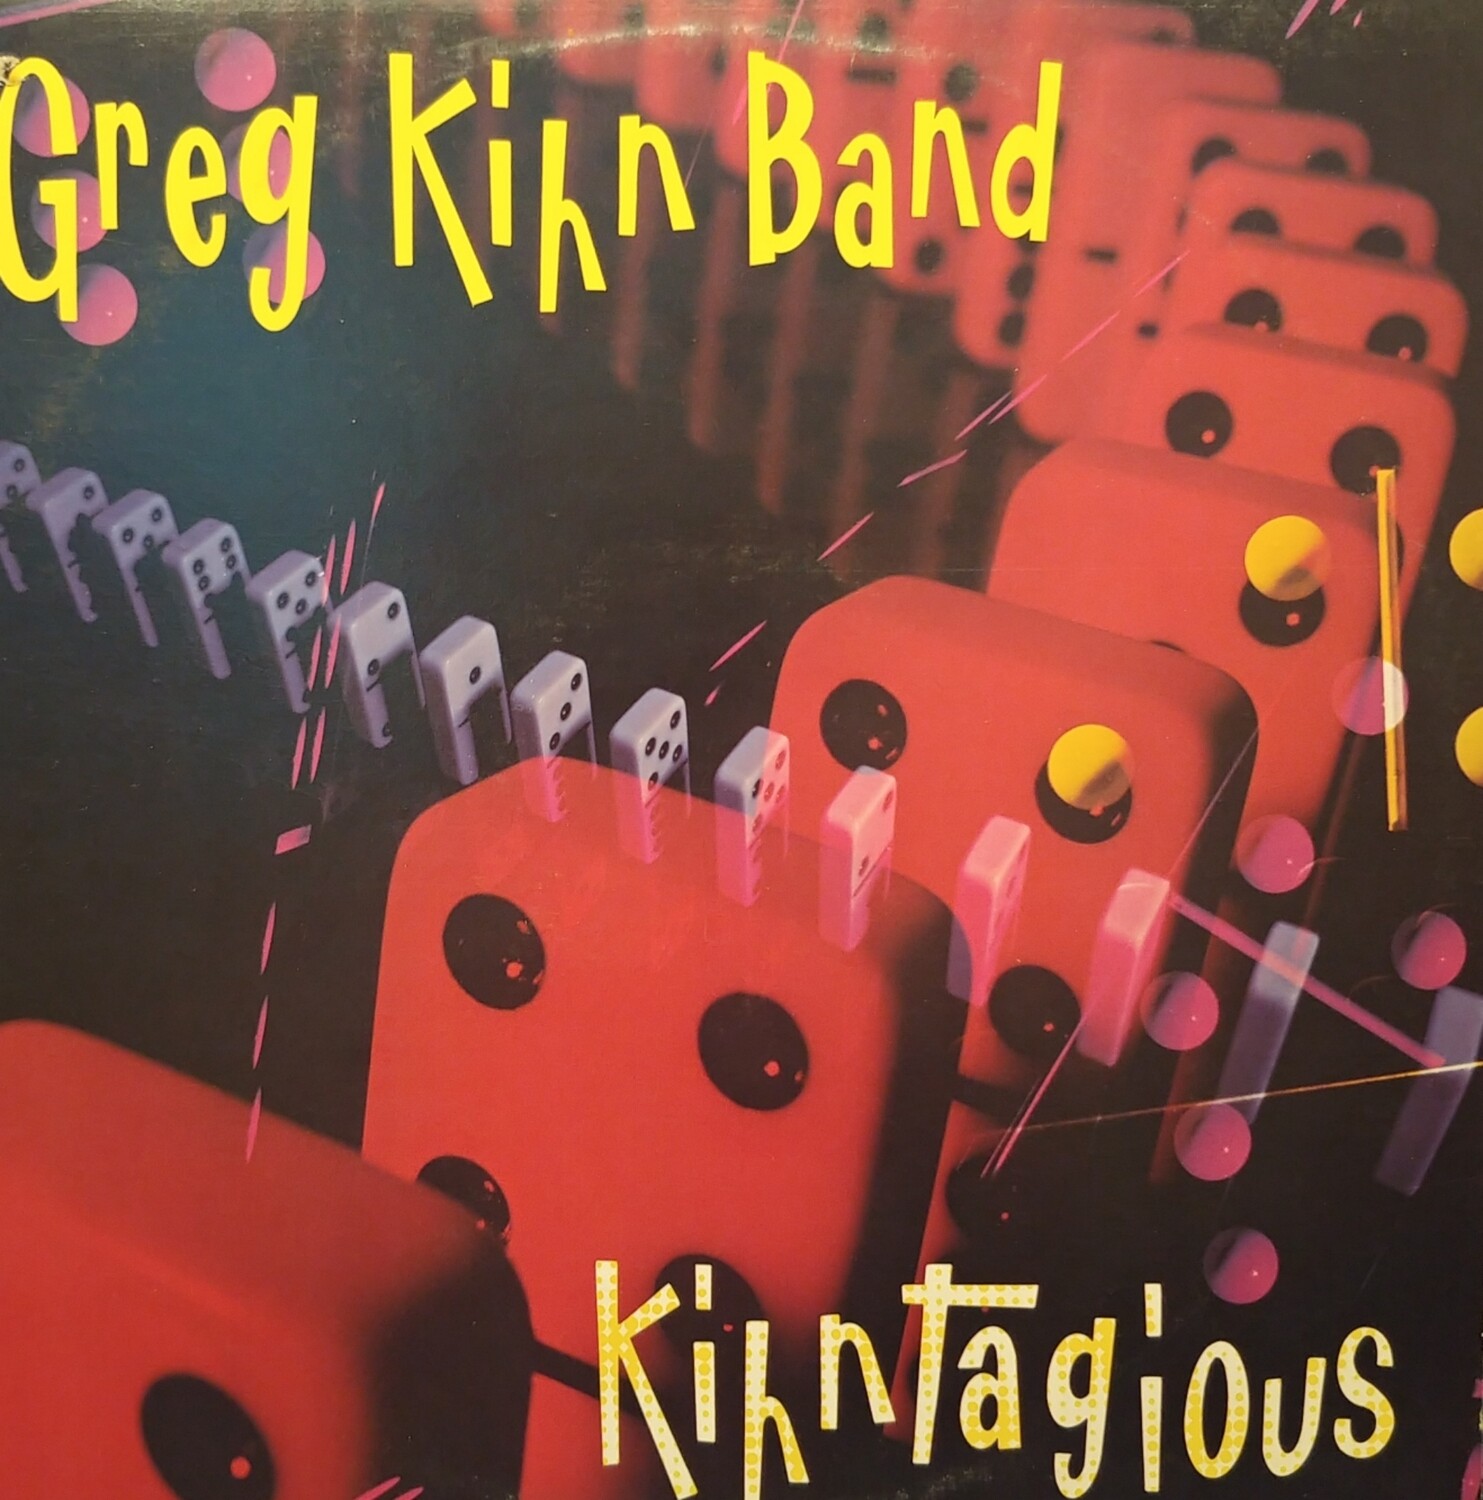 Greg Kihn Band - Kihntagious